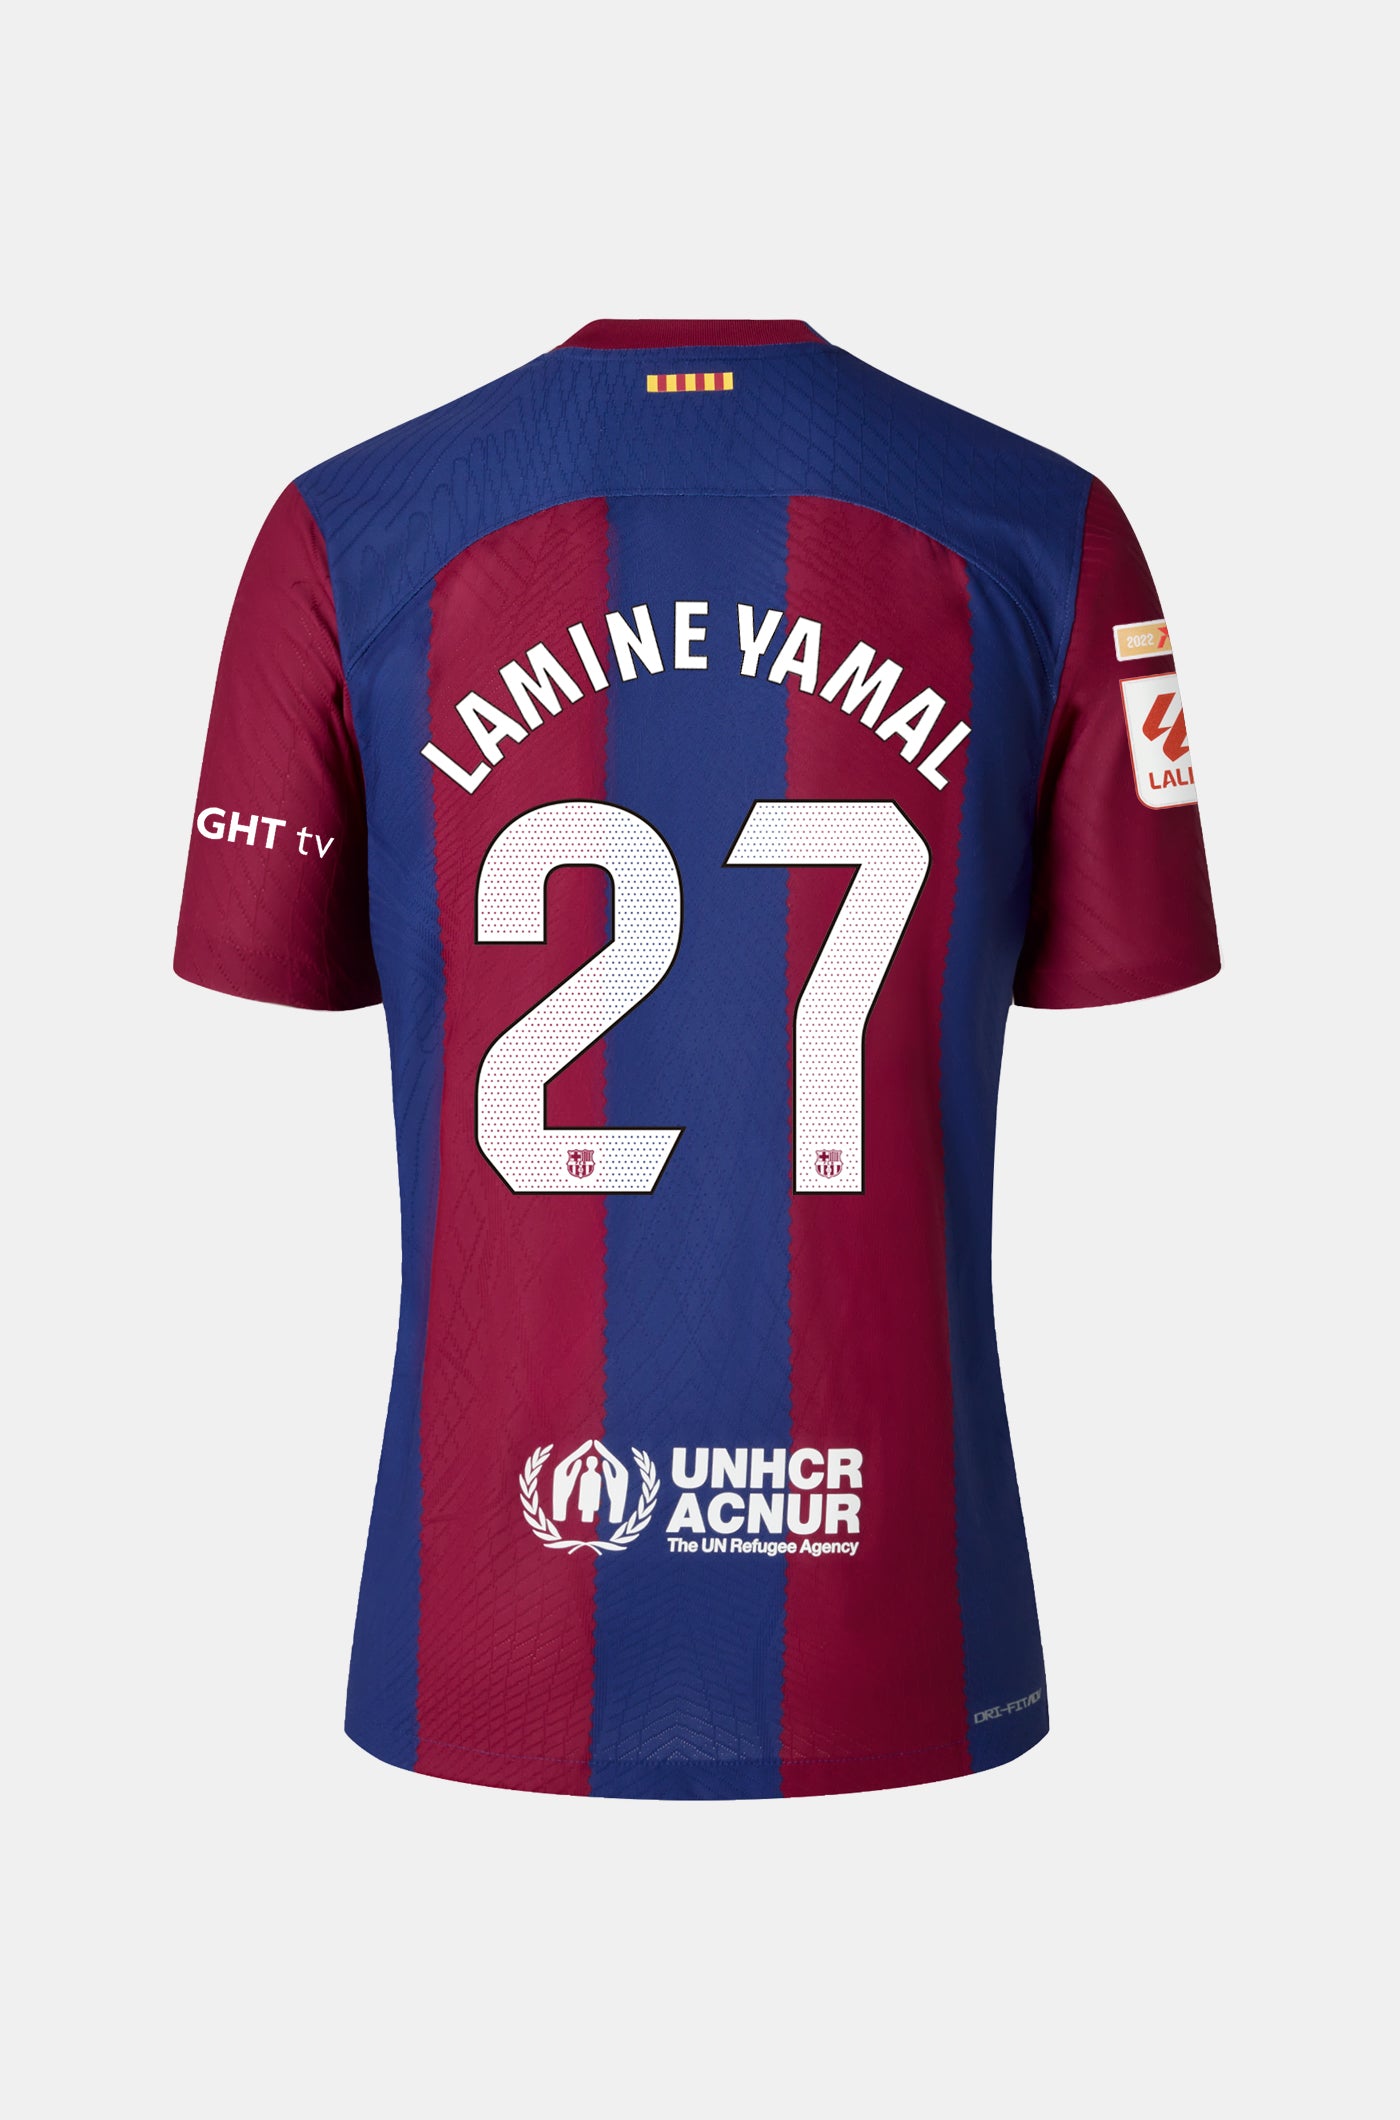 LFP FC Barcelona home shirt 23/24 Player's Edition - LAMINE YAMAL